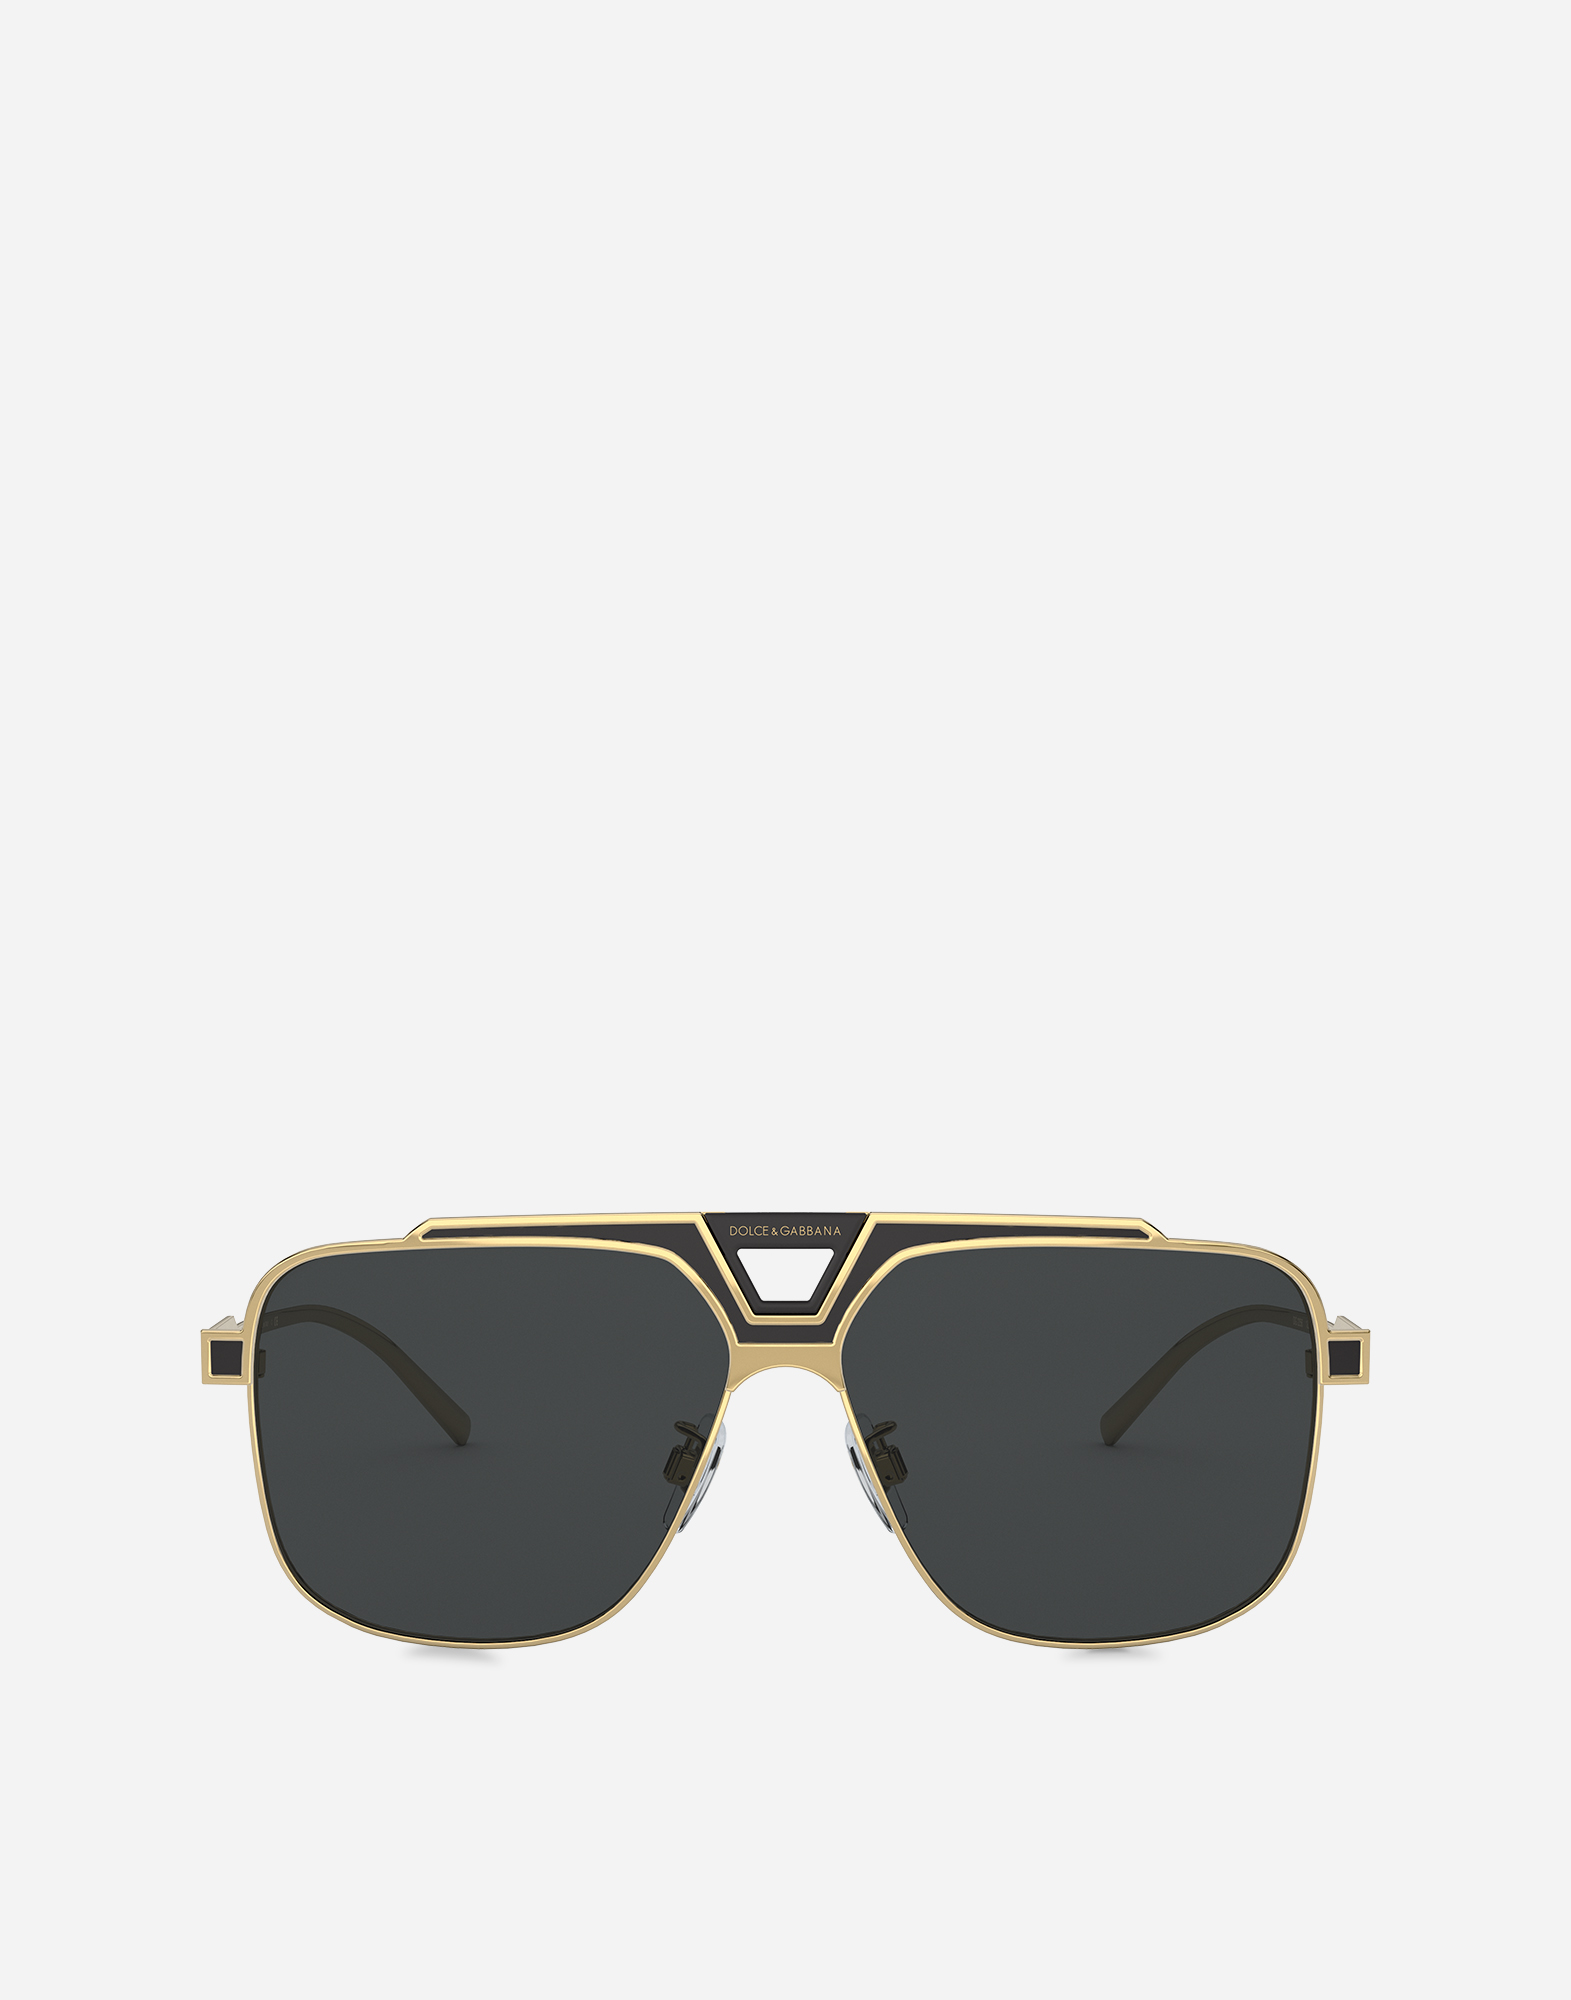 sunglasses dolce gabbana mens